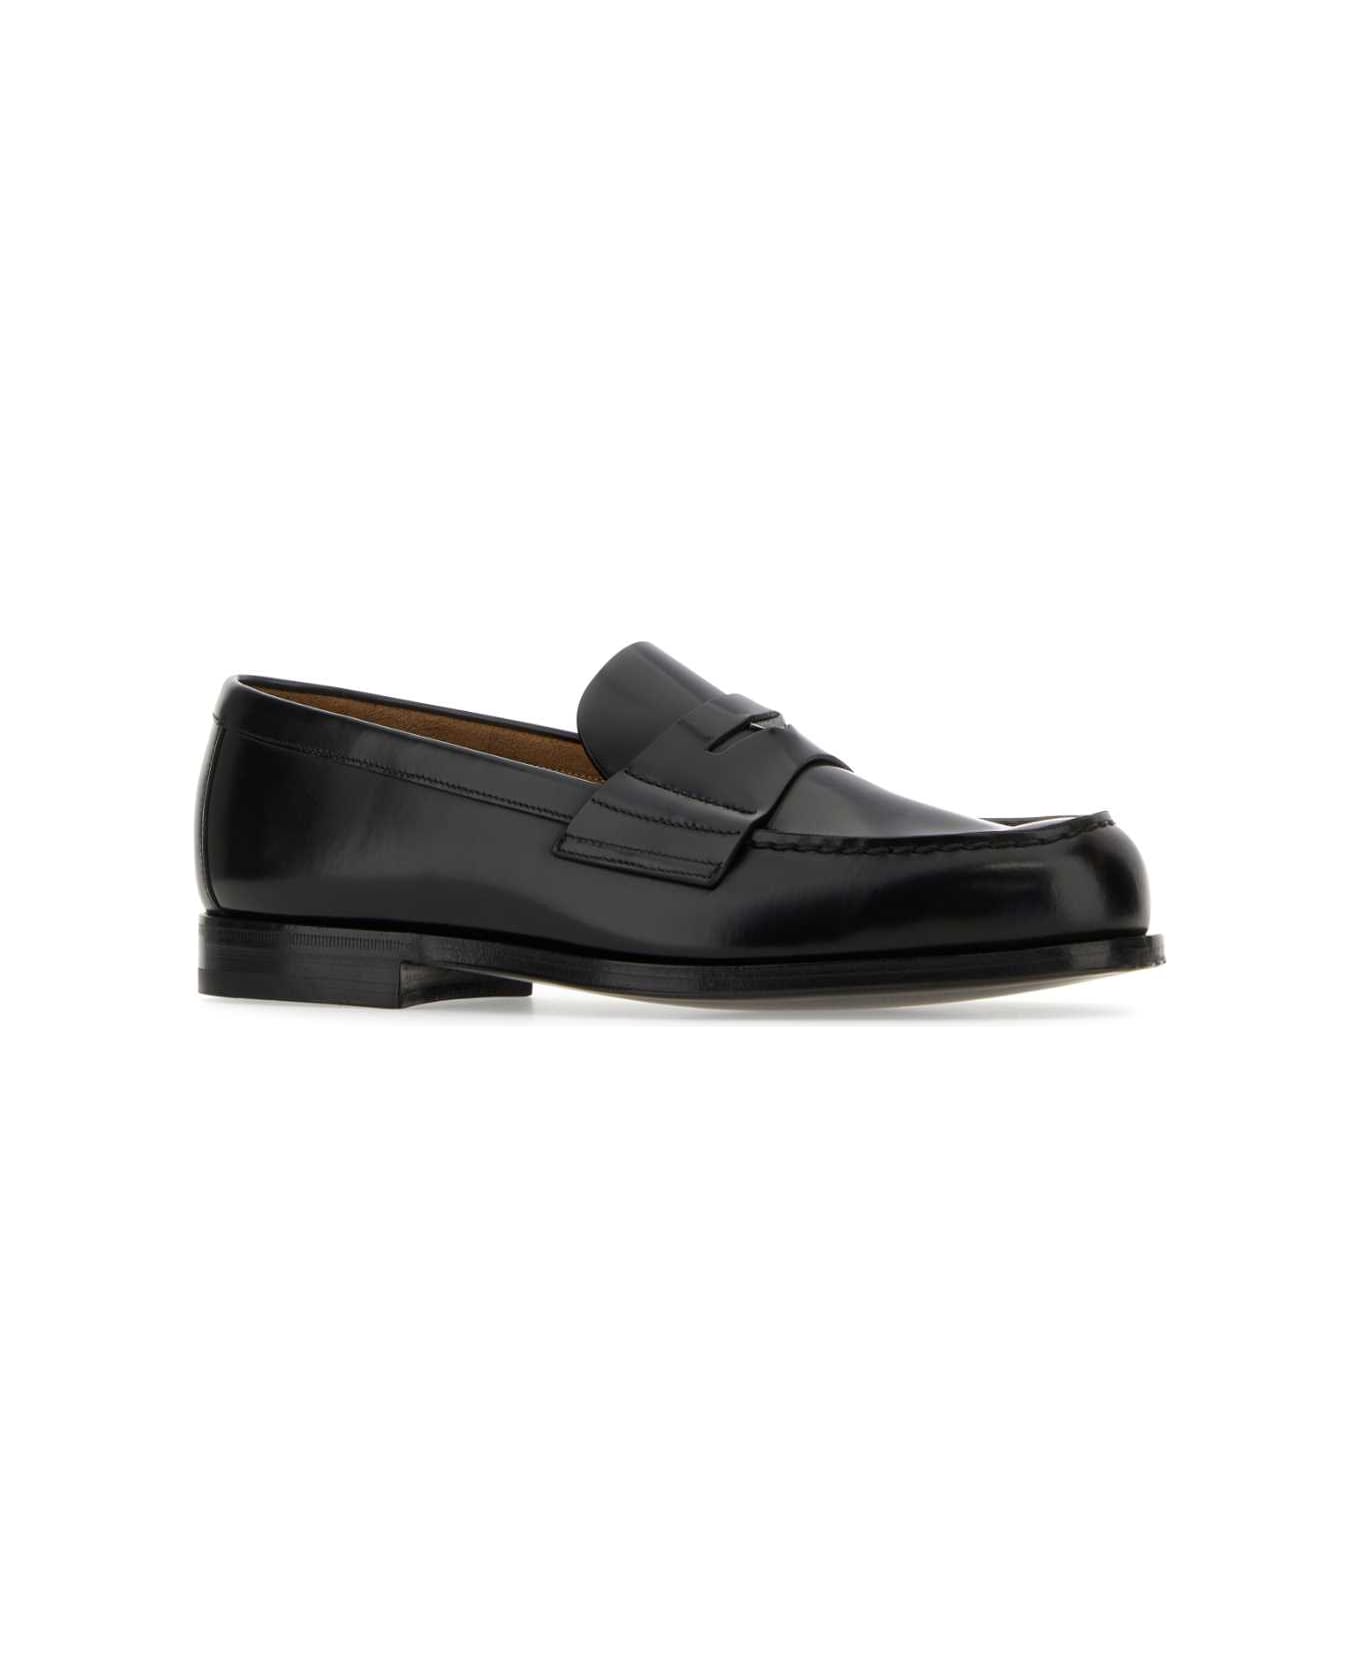 Prada Black Leather Loafers - F0002